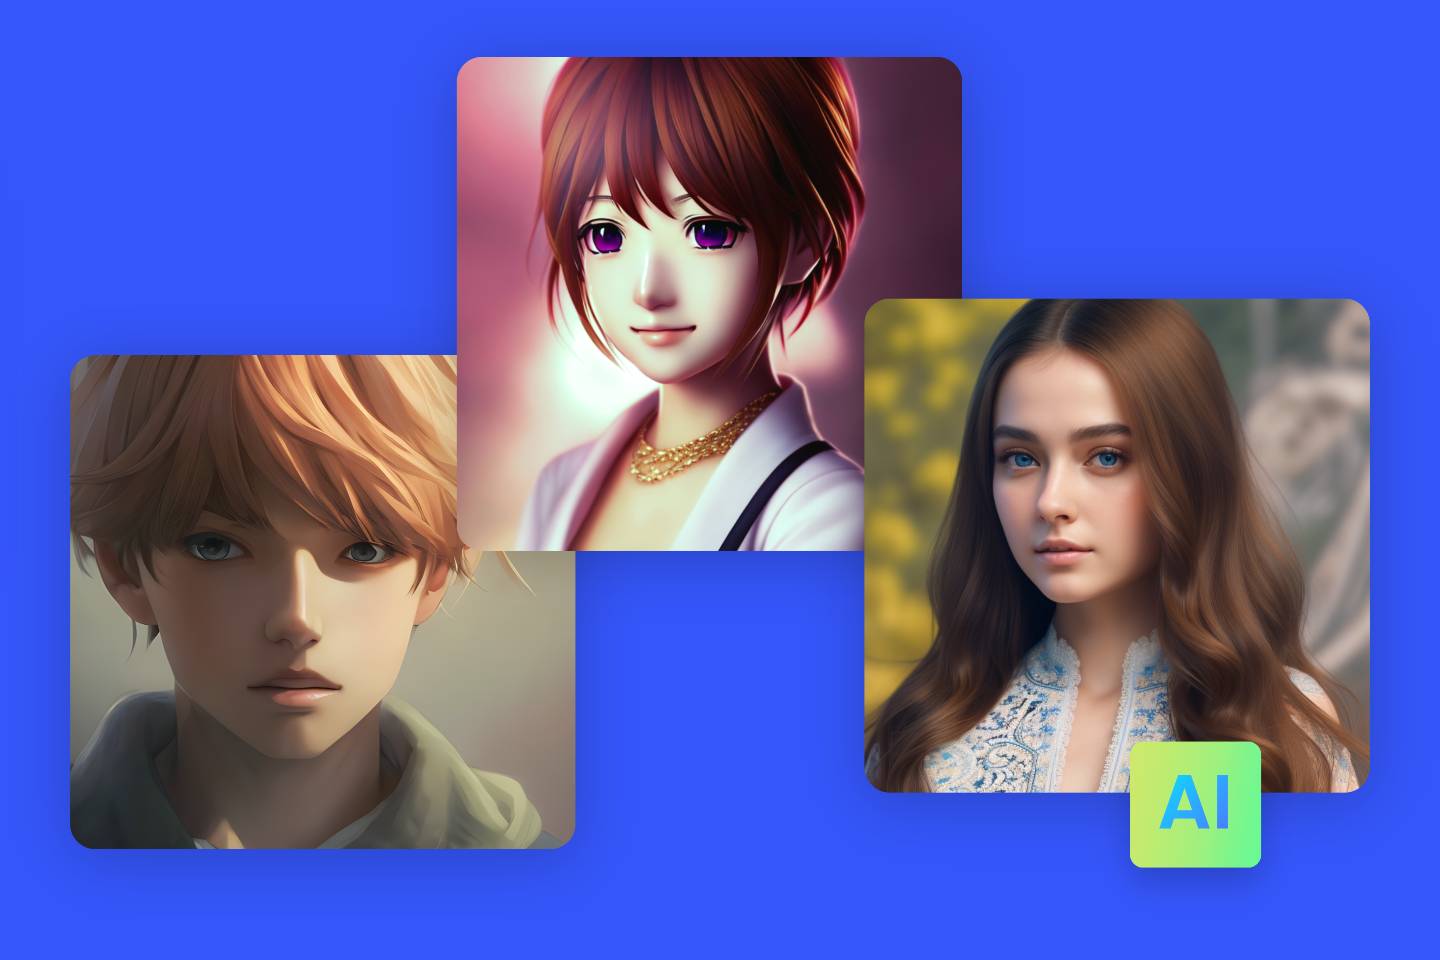 Top 10 Animation Software for Anime Popular Among Artists